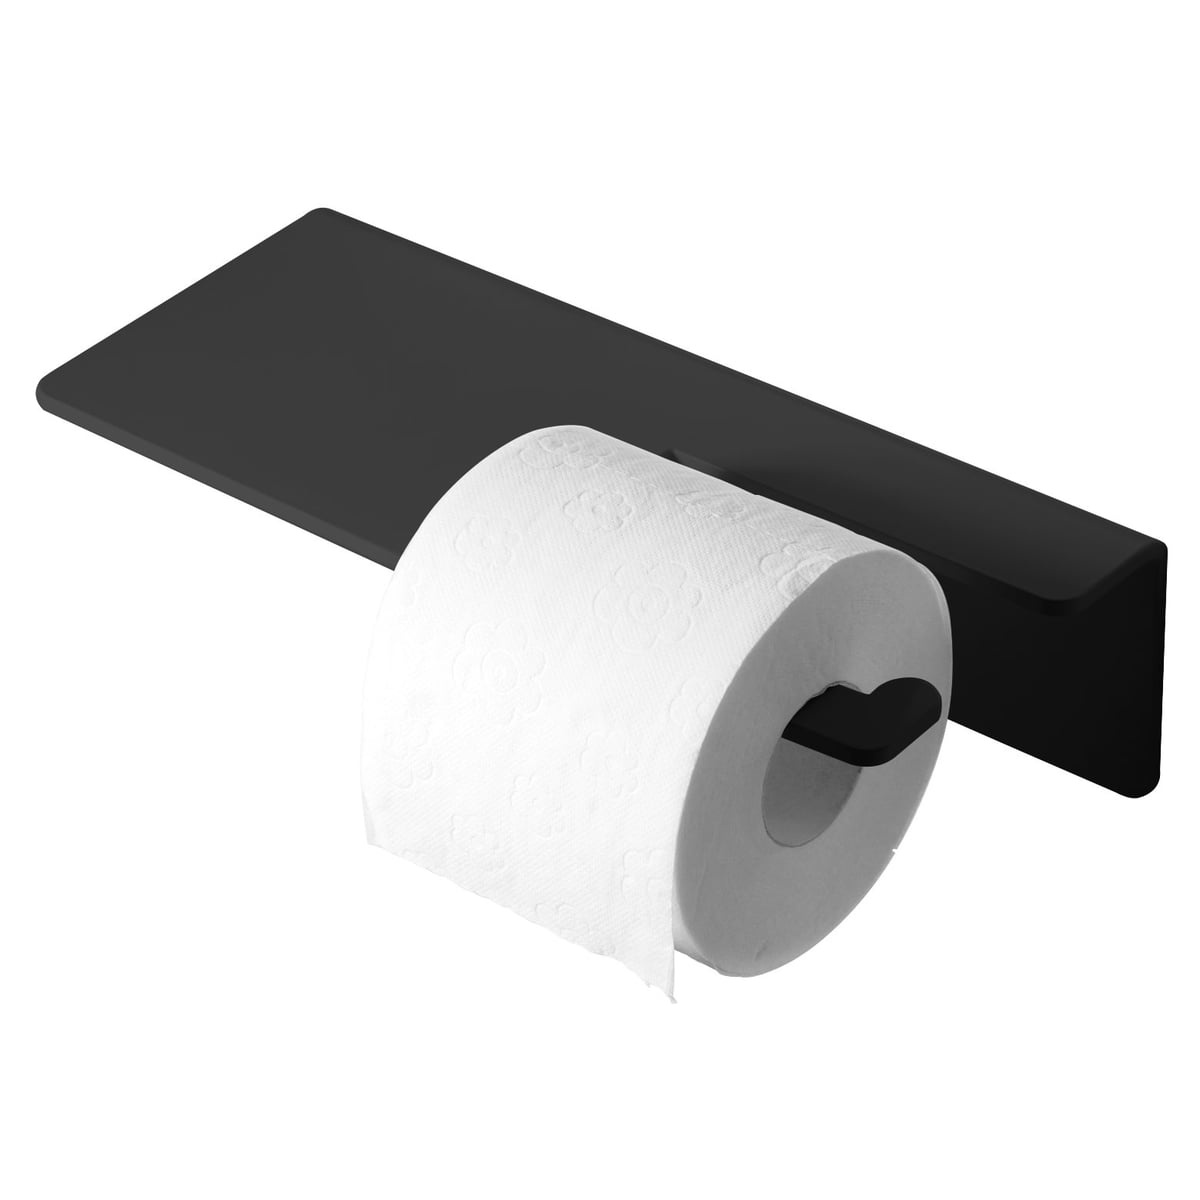 The Puro Toilet Paper Holder by Radius Design